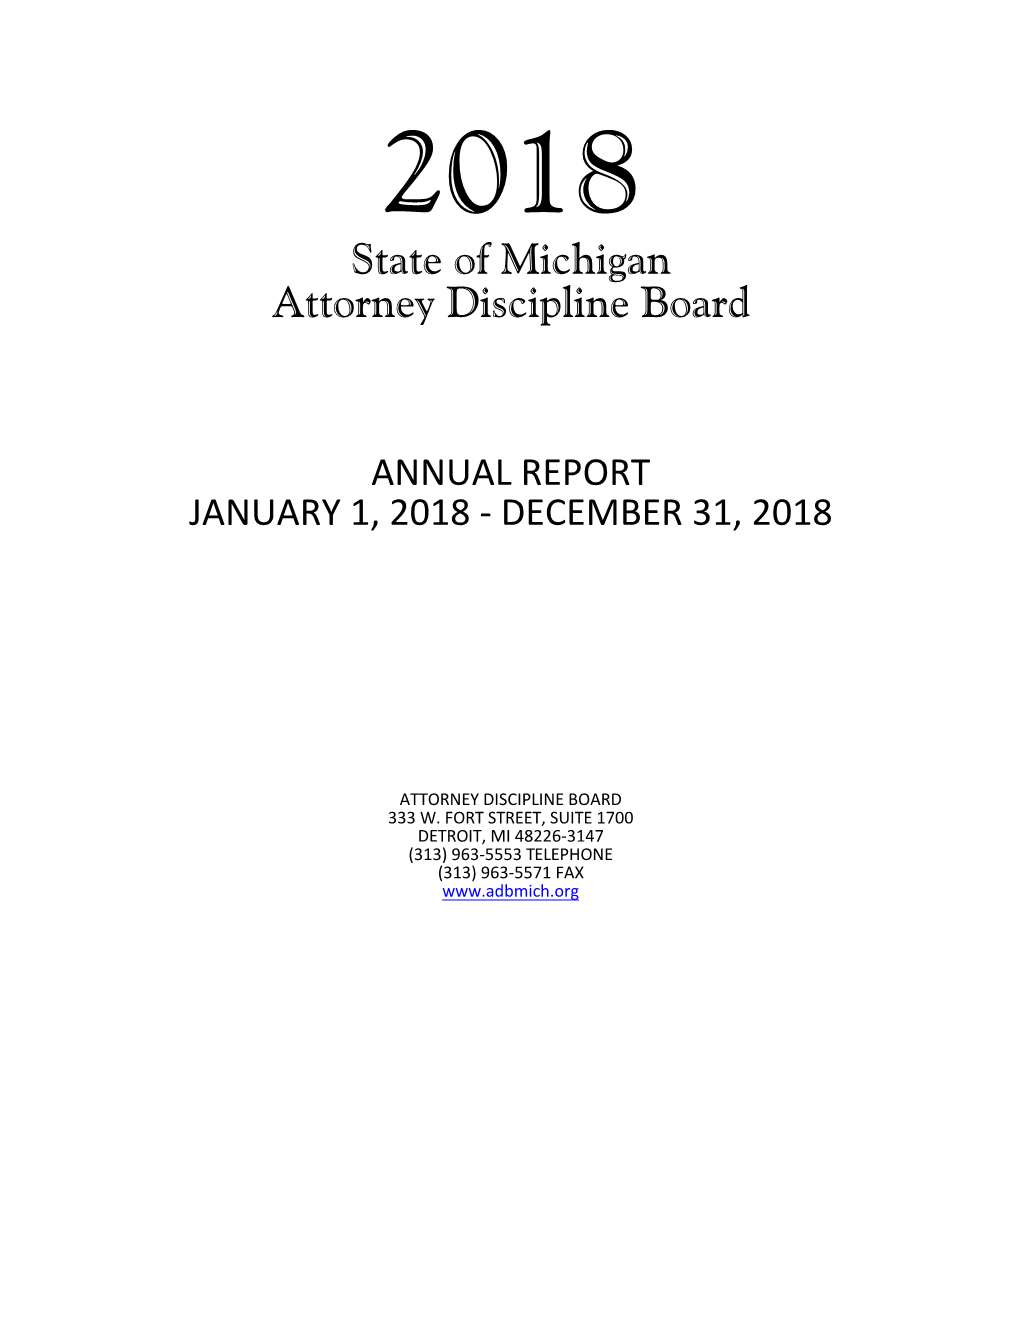 2018 ADB Annual Report